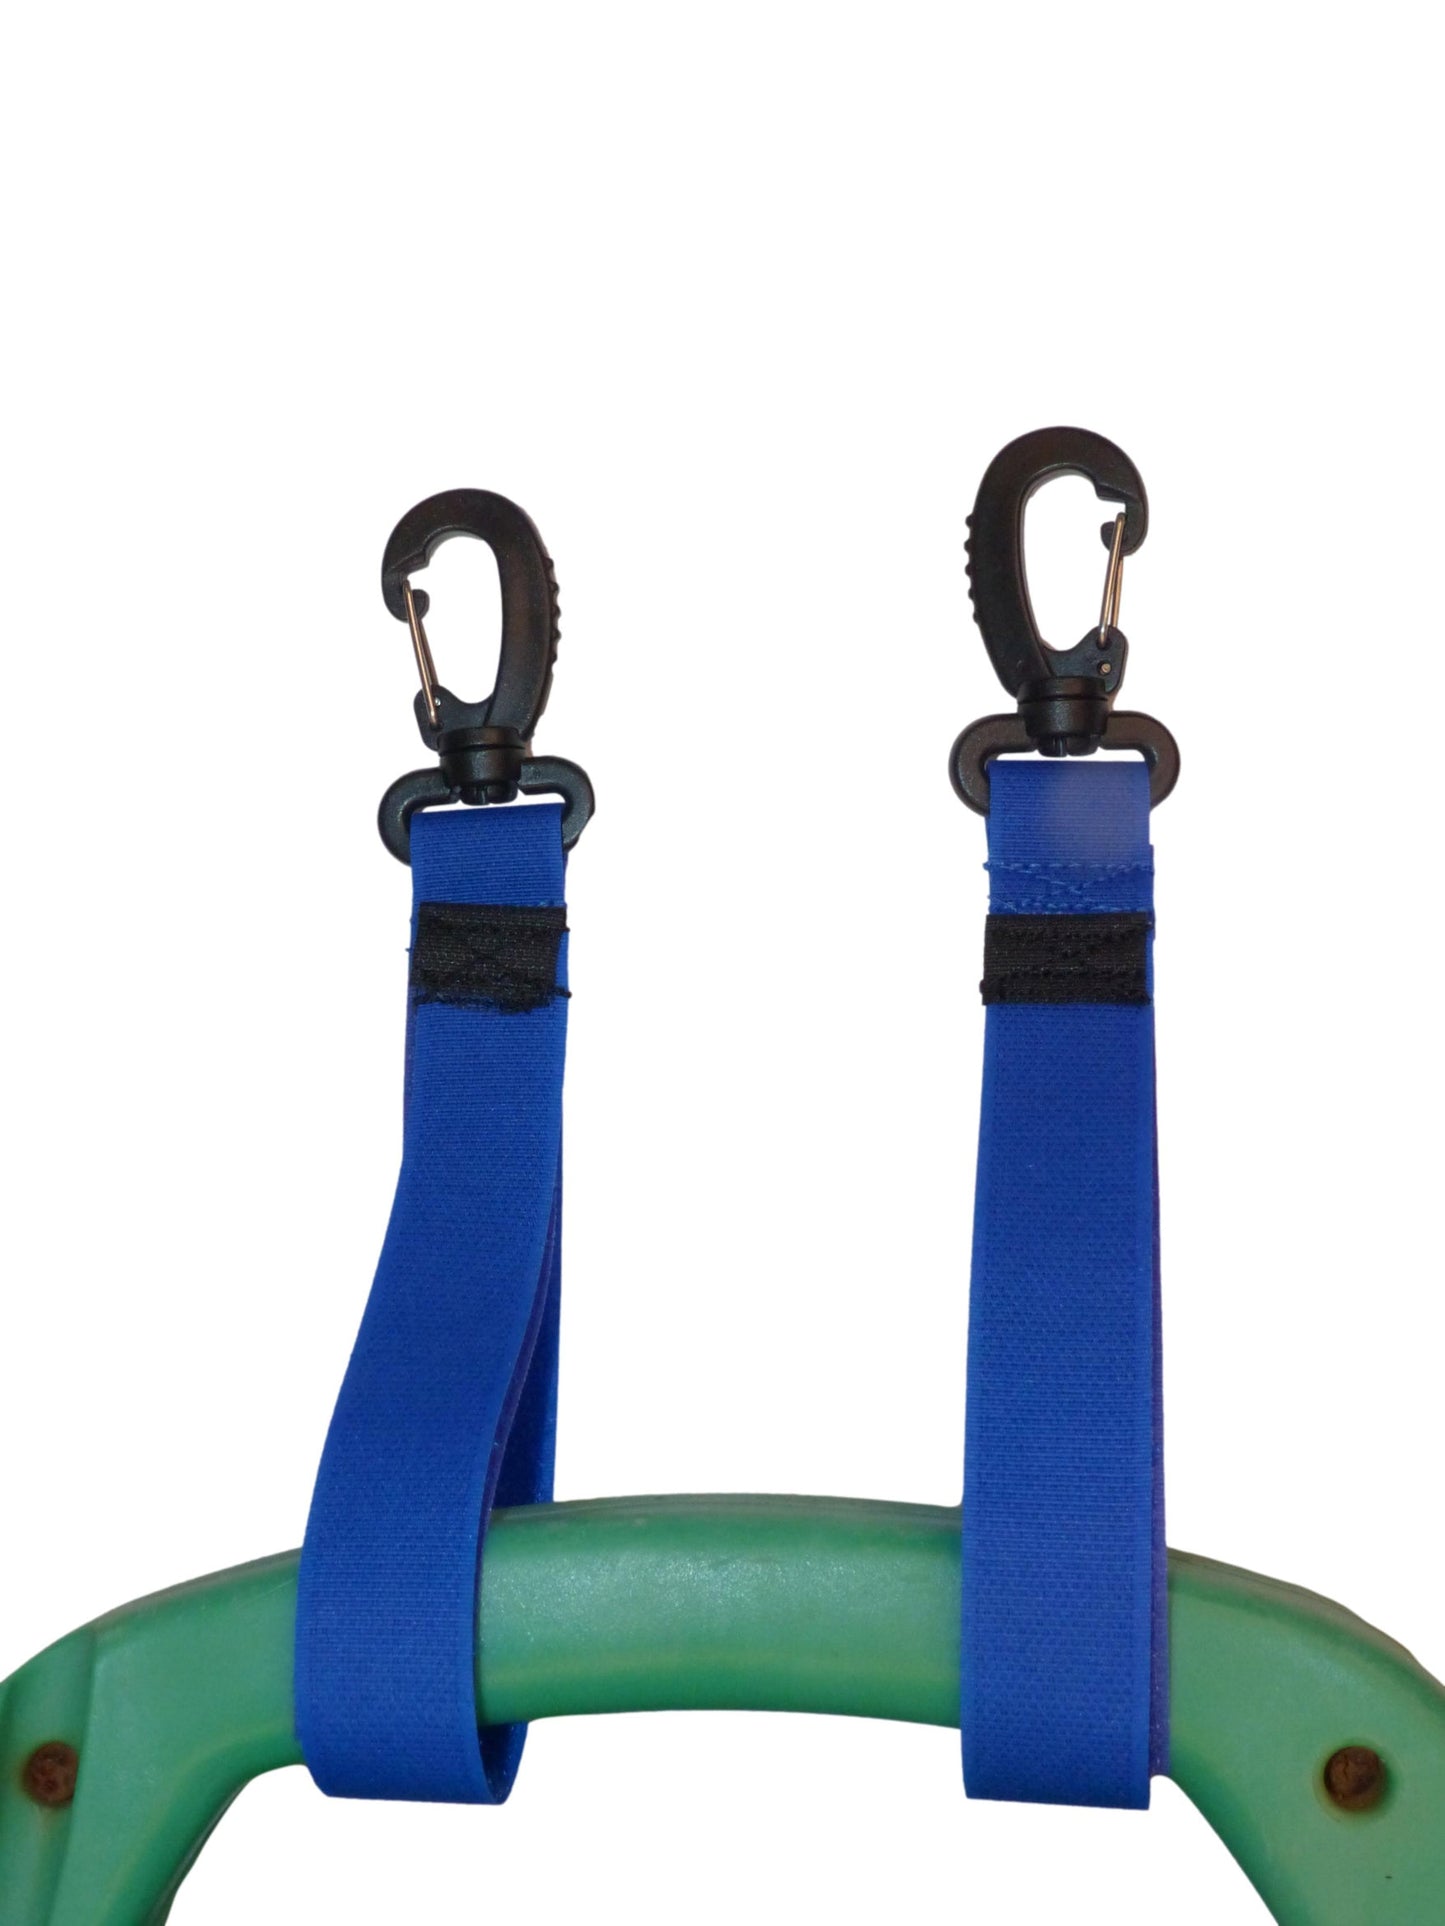 25mm Hook & Loop Hanging Strap with Snap Buckle (Pair) in blue